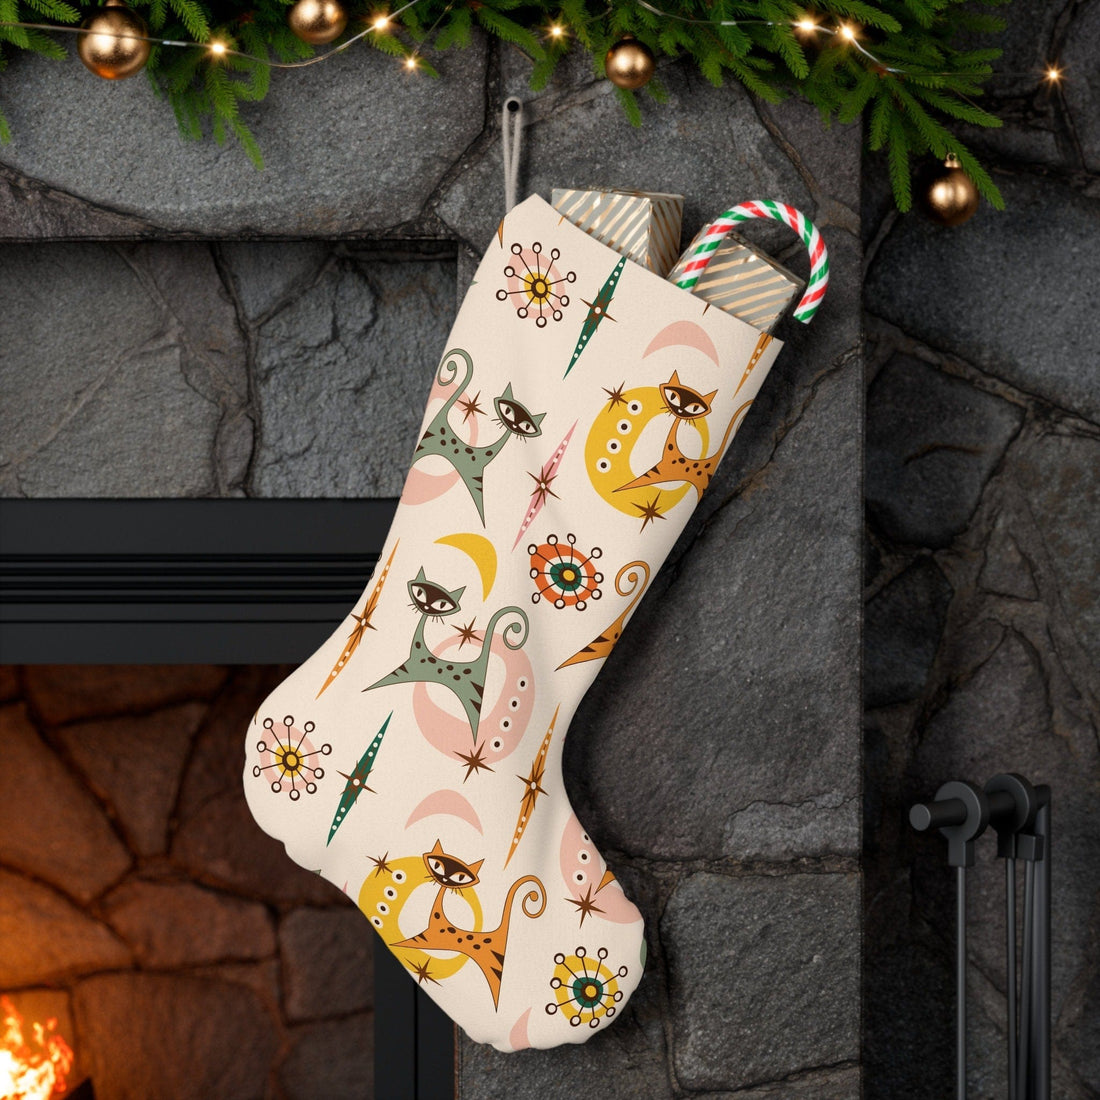 Kate McEnroe New York Atomic Kitschy Cat Santa Stocking, 50s Retro Vintage Style Diamond Starburst Christmas Stockings, MCM Holiday Decor Holiday Stockings 98446025884550017112